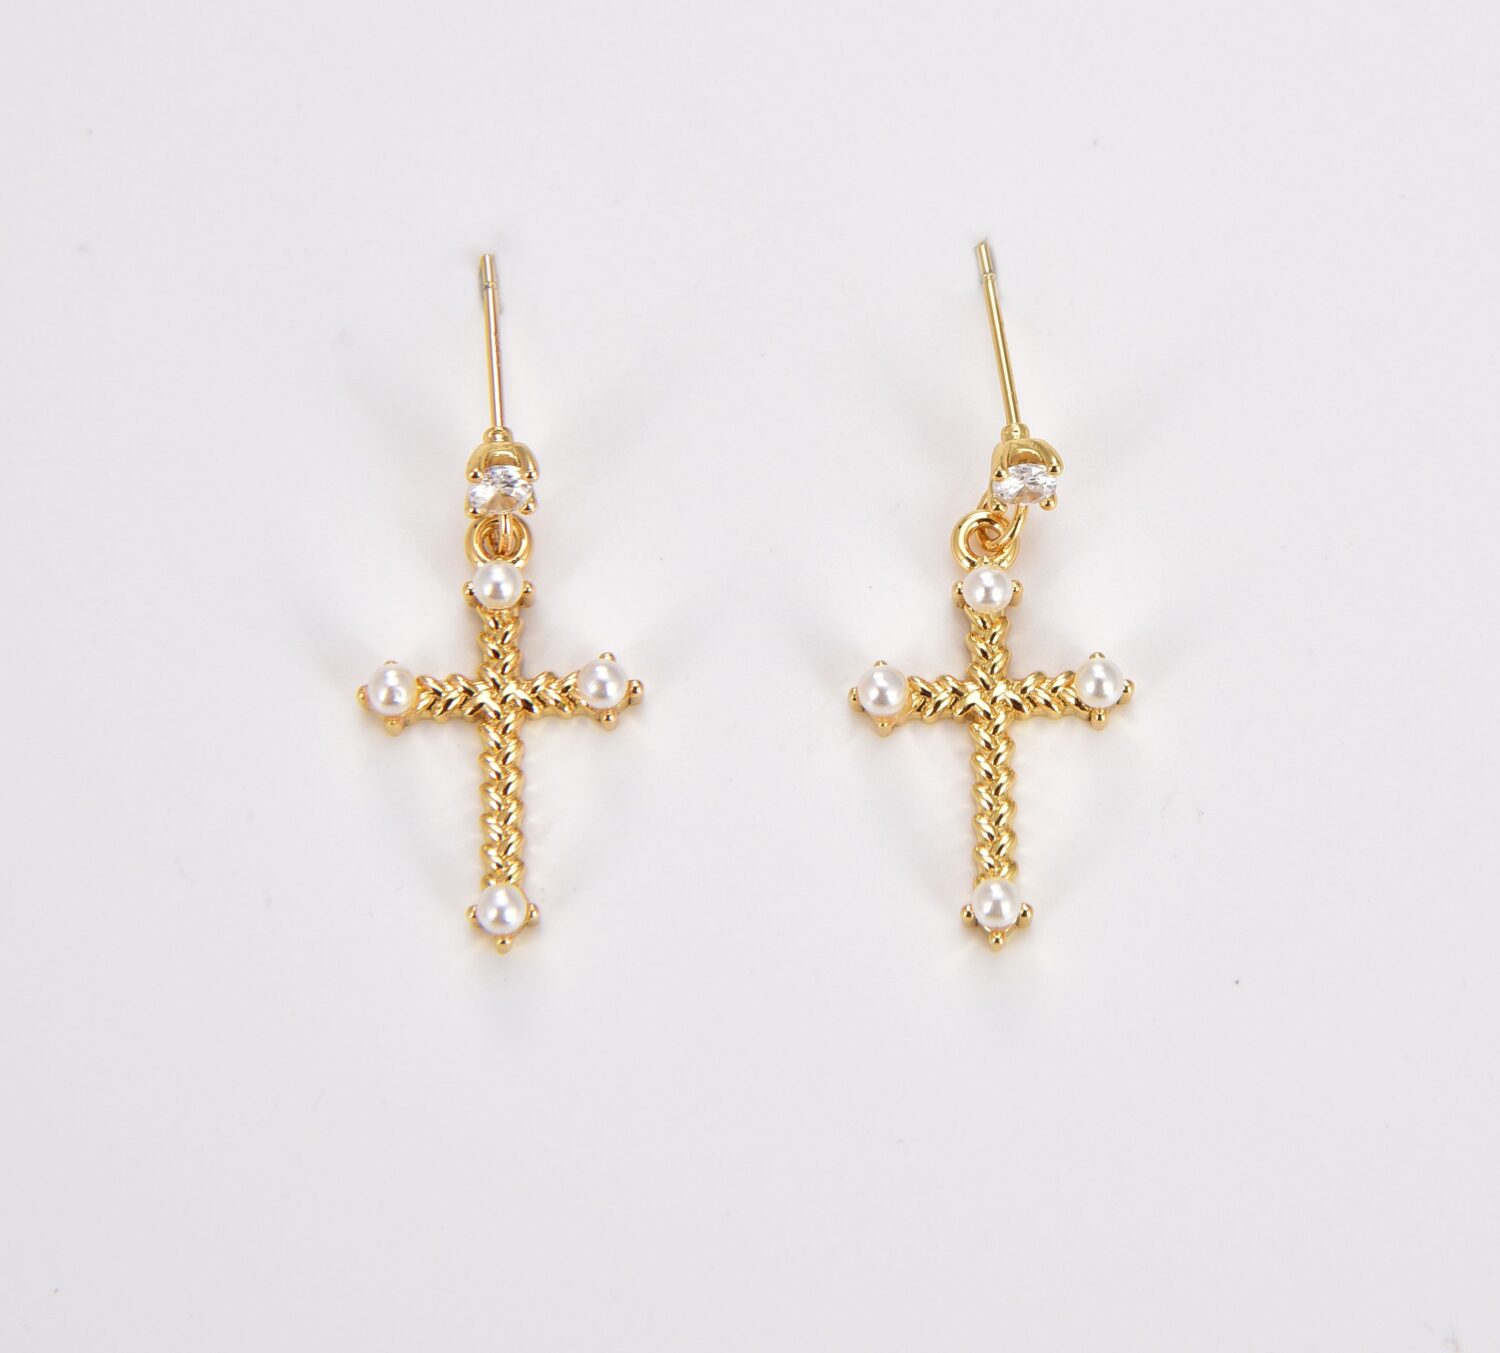 Ivy & Bauble 14k gold plated Sterling Silver Cross CZ Dangle Hoop Earrings